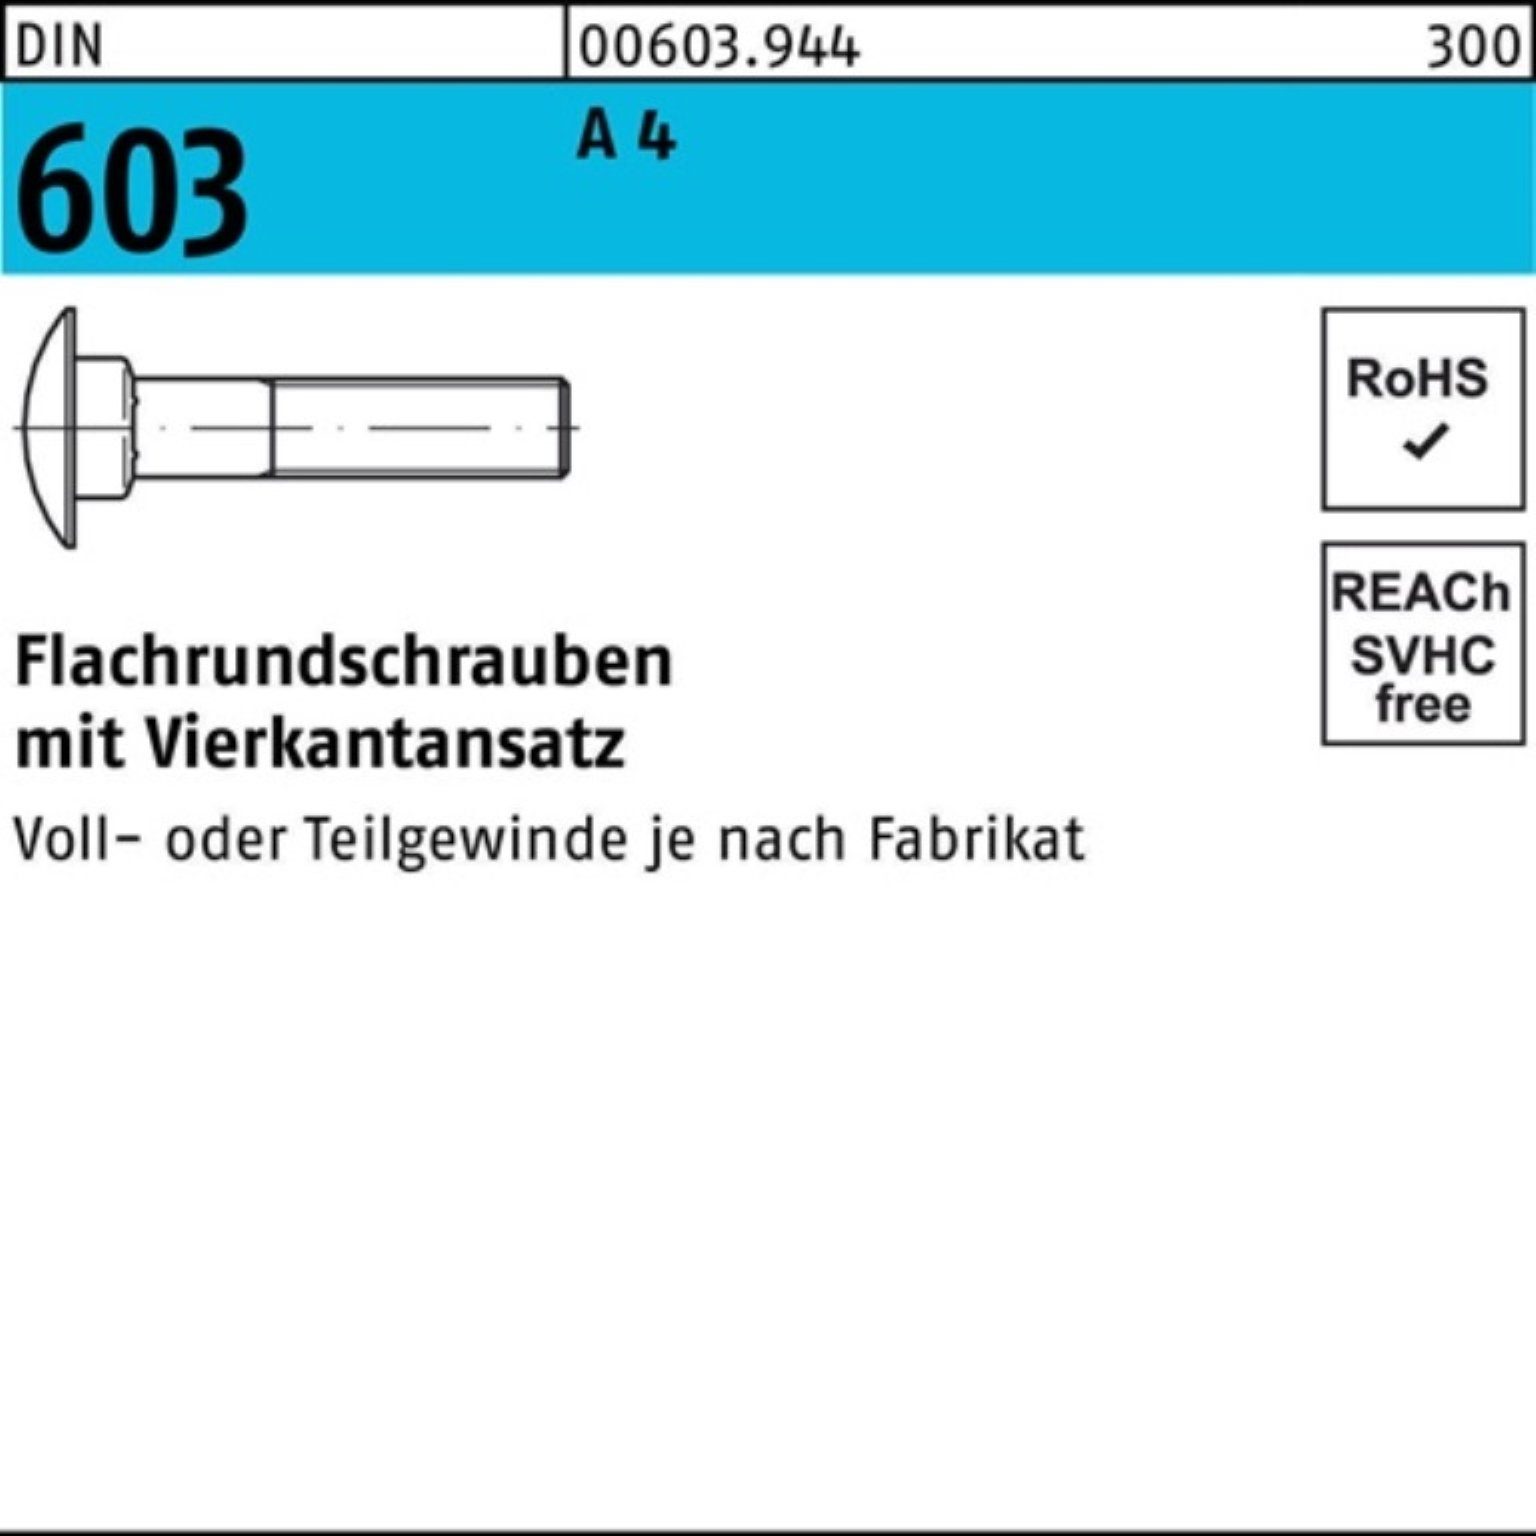 Reyher Schraube 100er Pack Flachrundschraube DIN 603 Vierkantansatz M12x 140 A 4 1 St